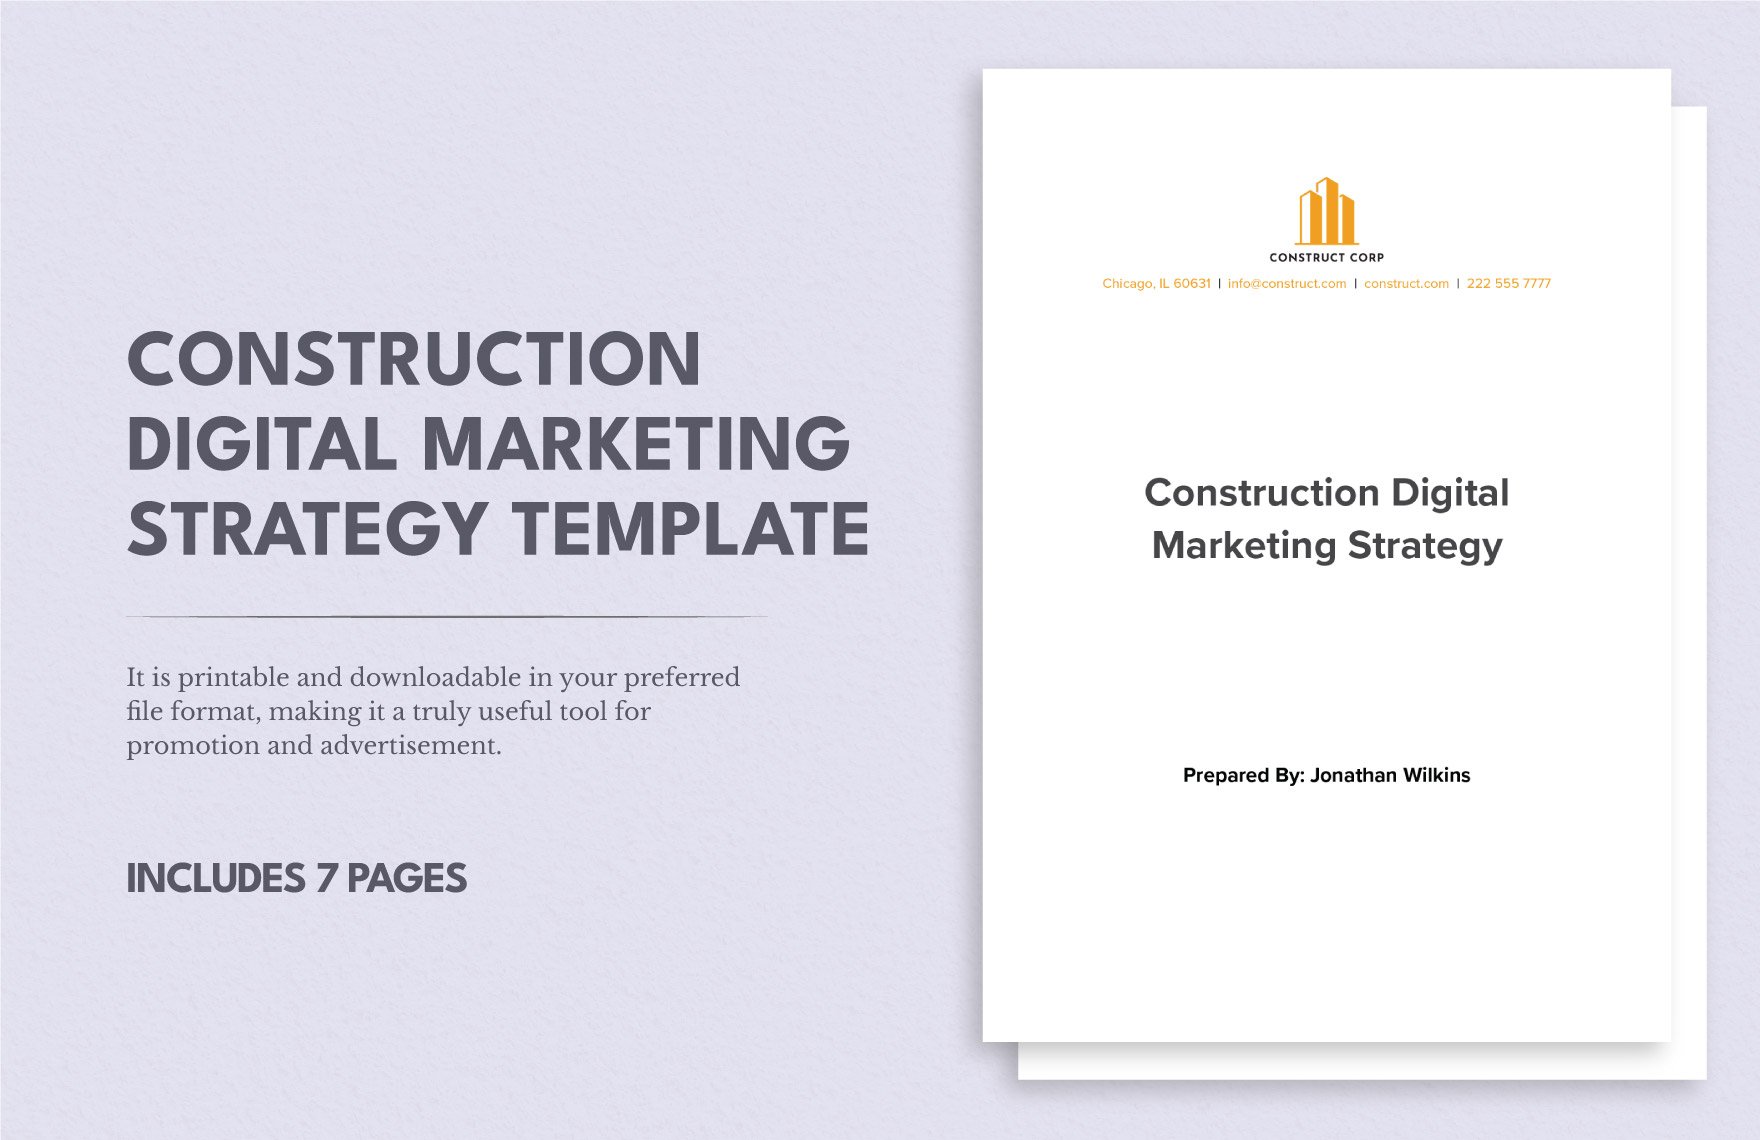 Construction Digital Marketing Strategy Template